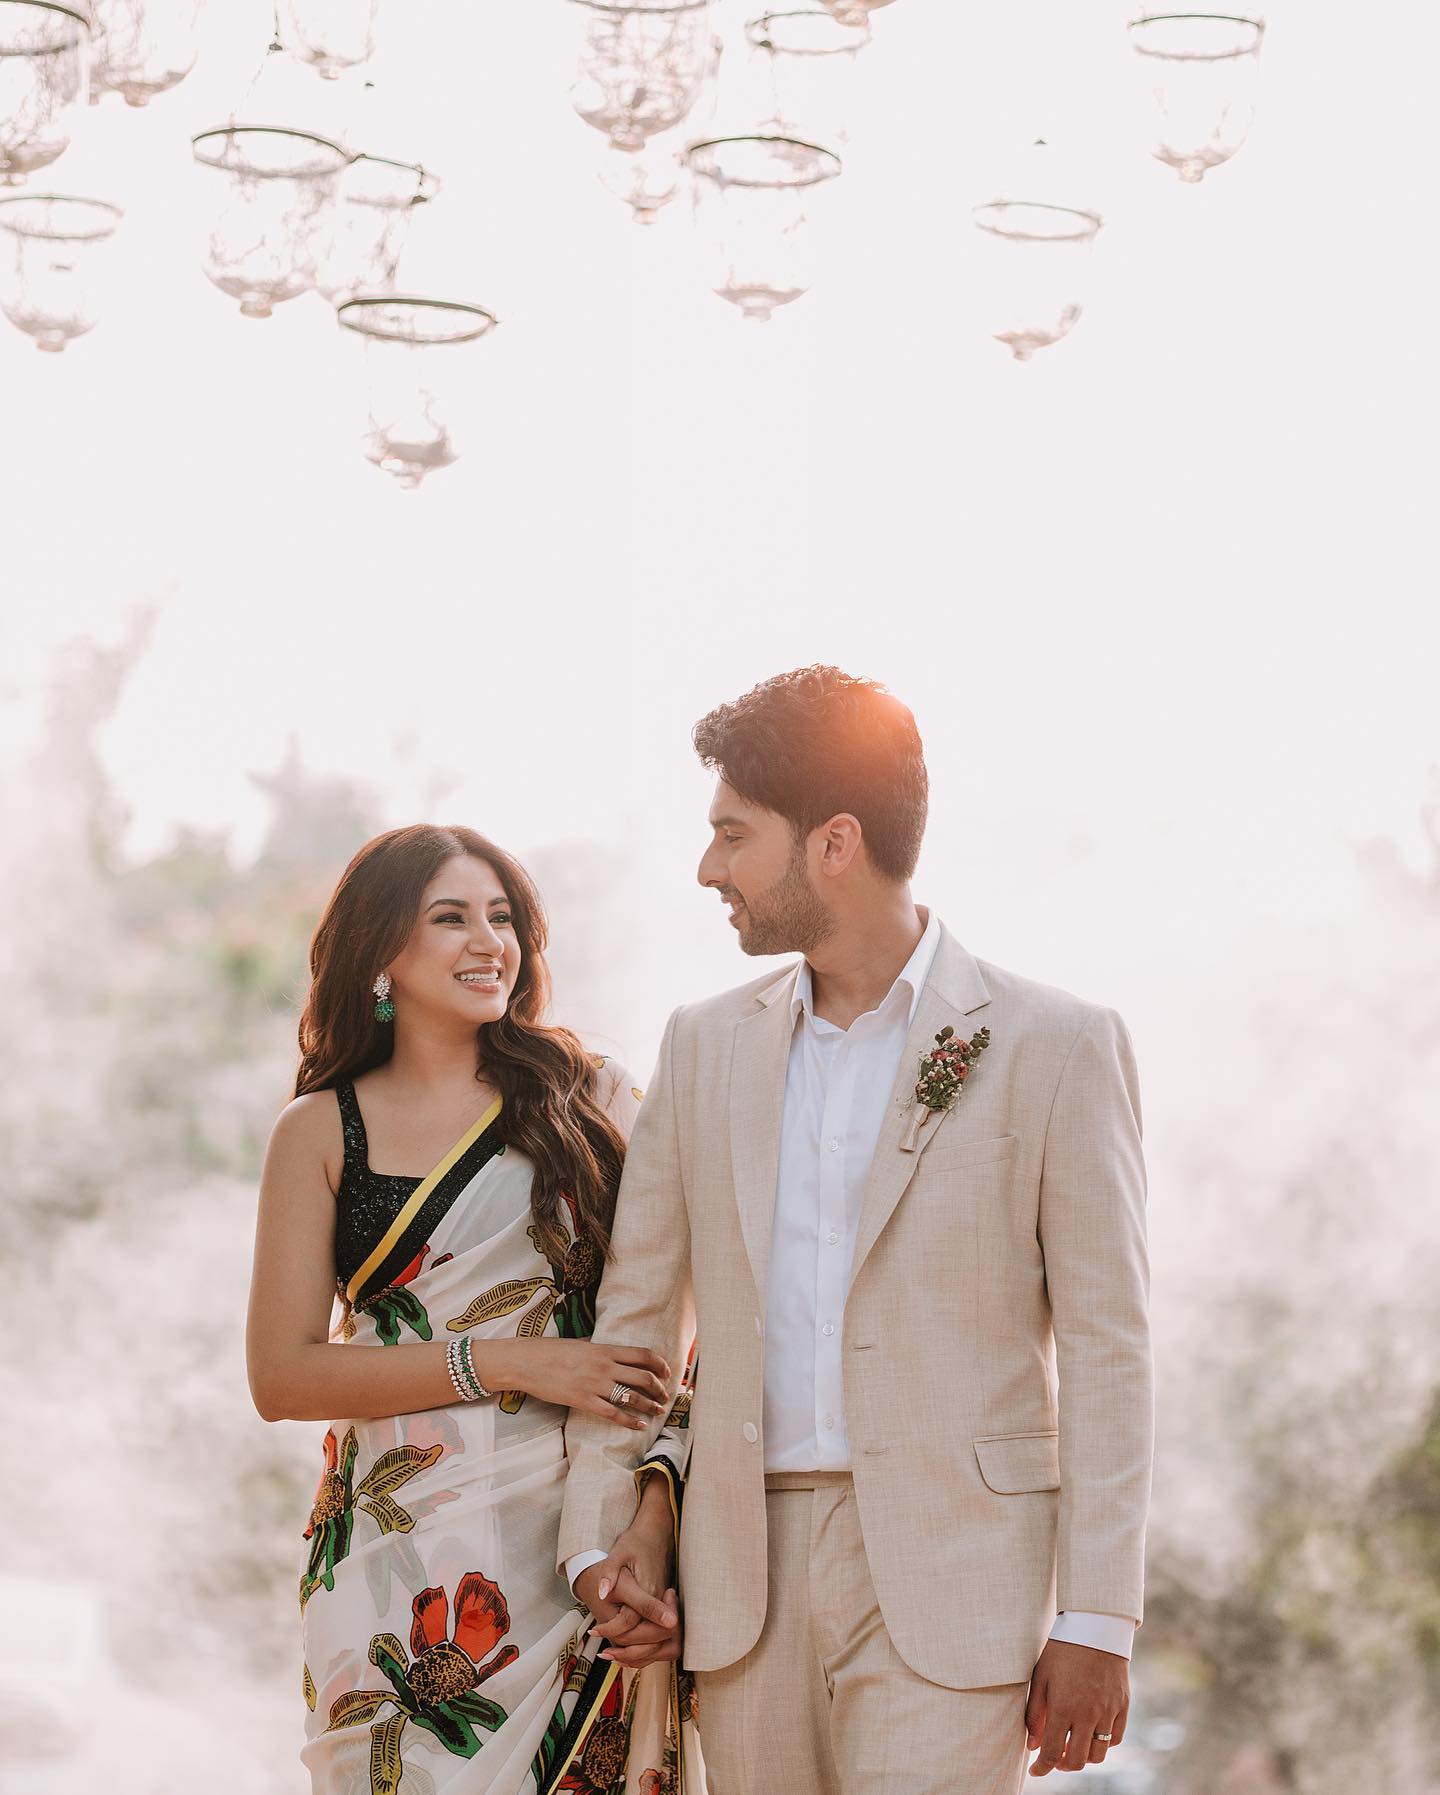 Arman Malik & Aashna Shroff Engagement Party pics